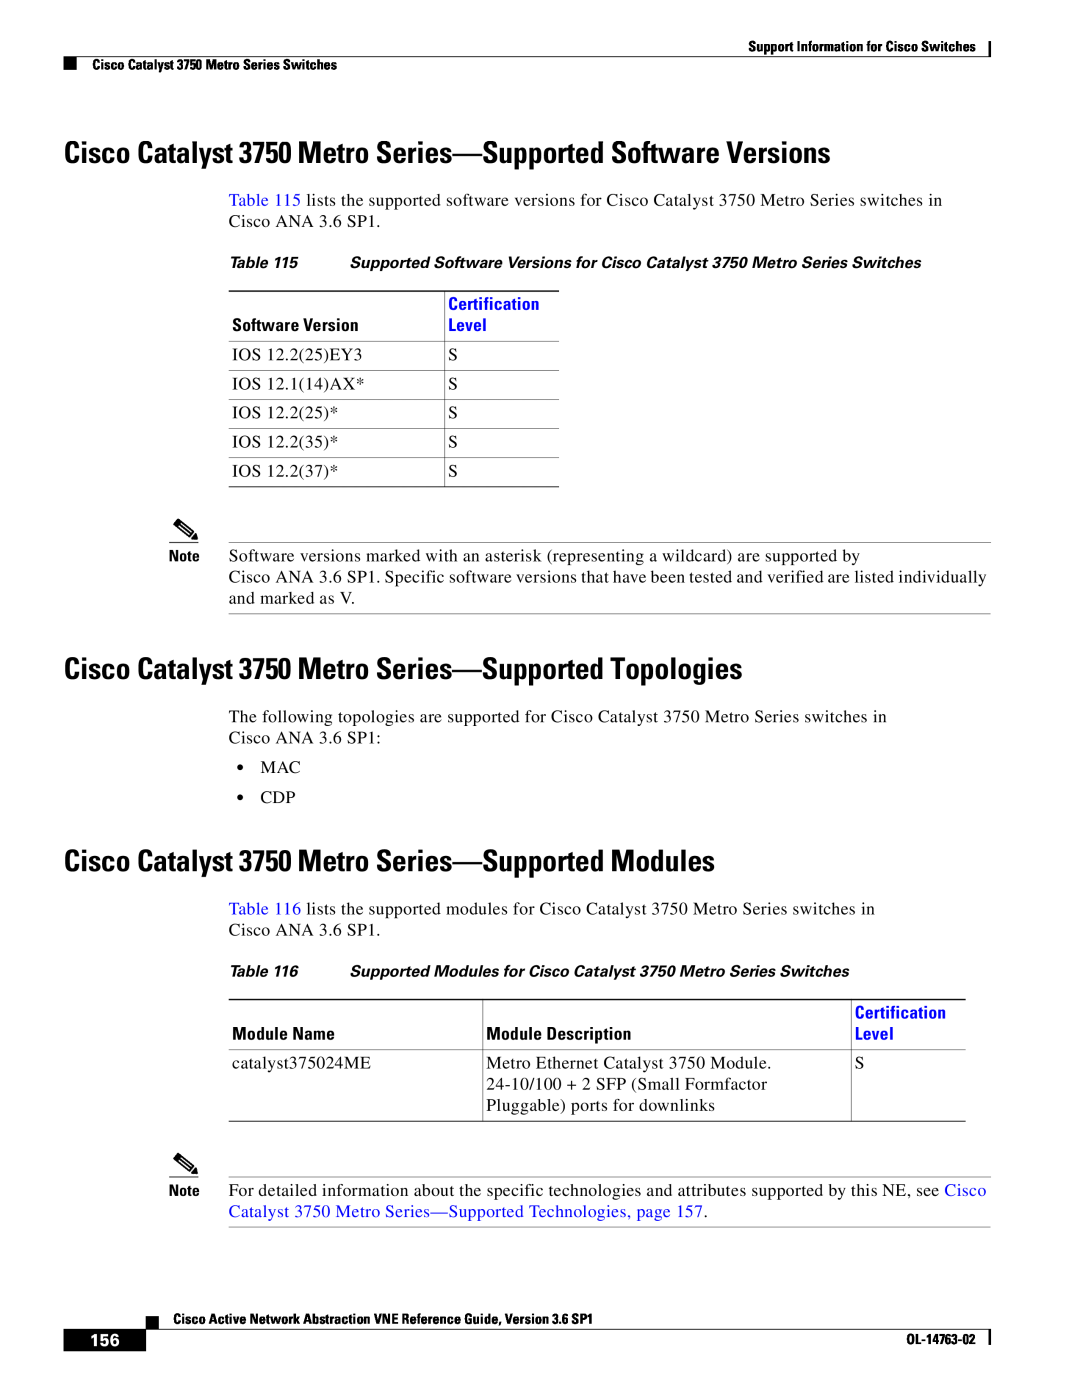 Cisco Systems OL-14763-02 Cisco Catalyst 3750 Metro Series-Supported Software Versions, Module Name, Module Description 